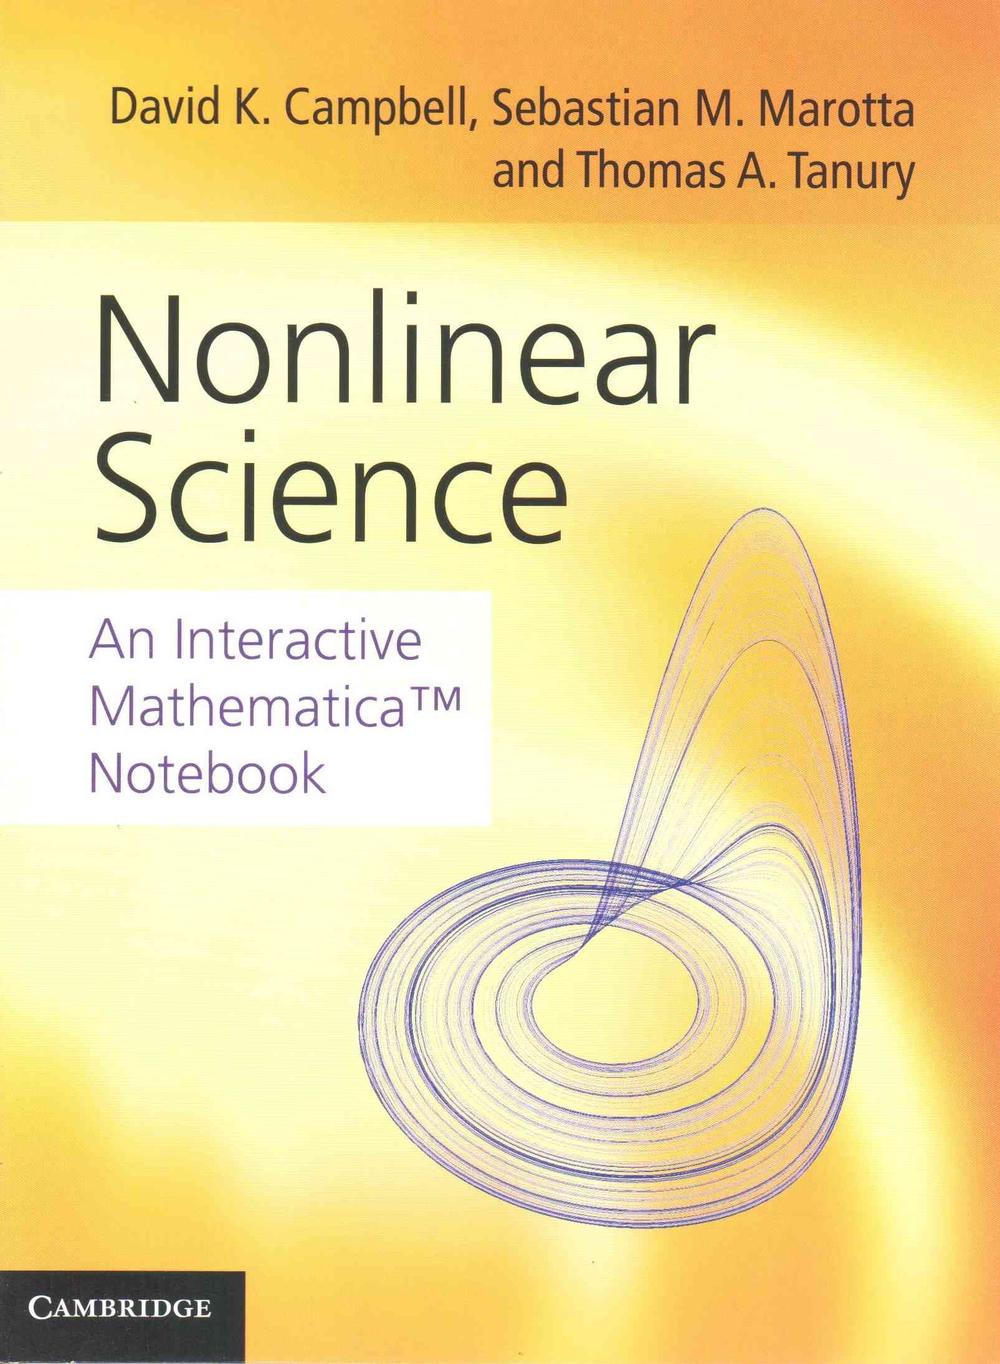 view mathematica notebook online